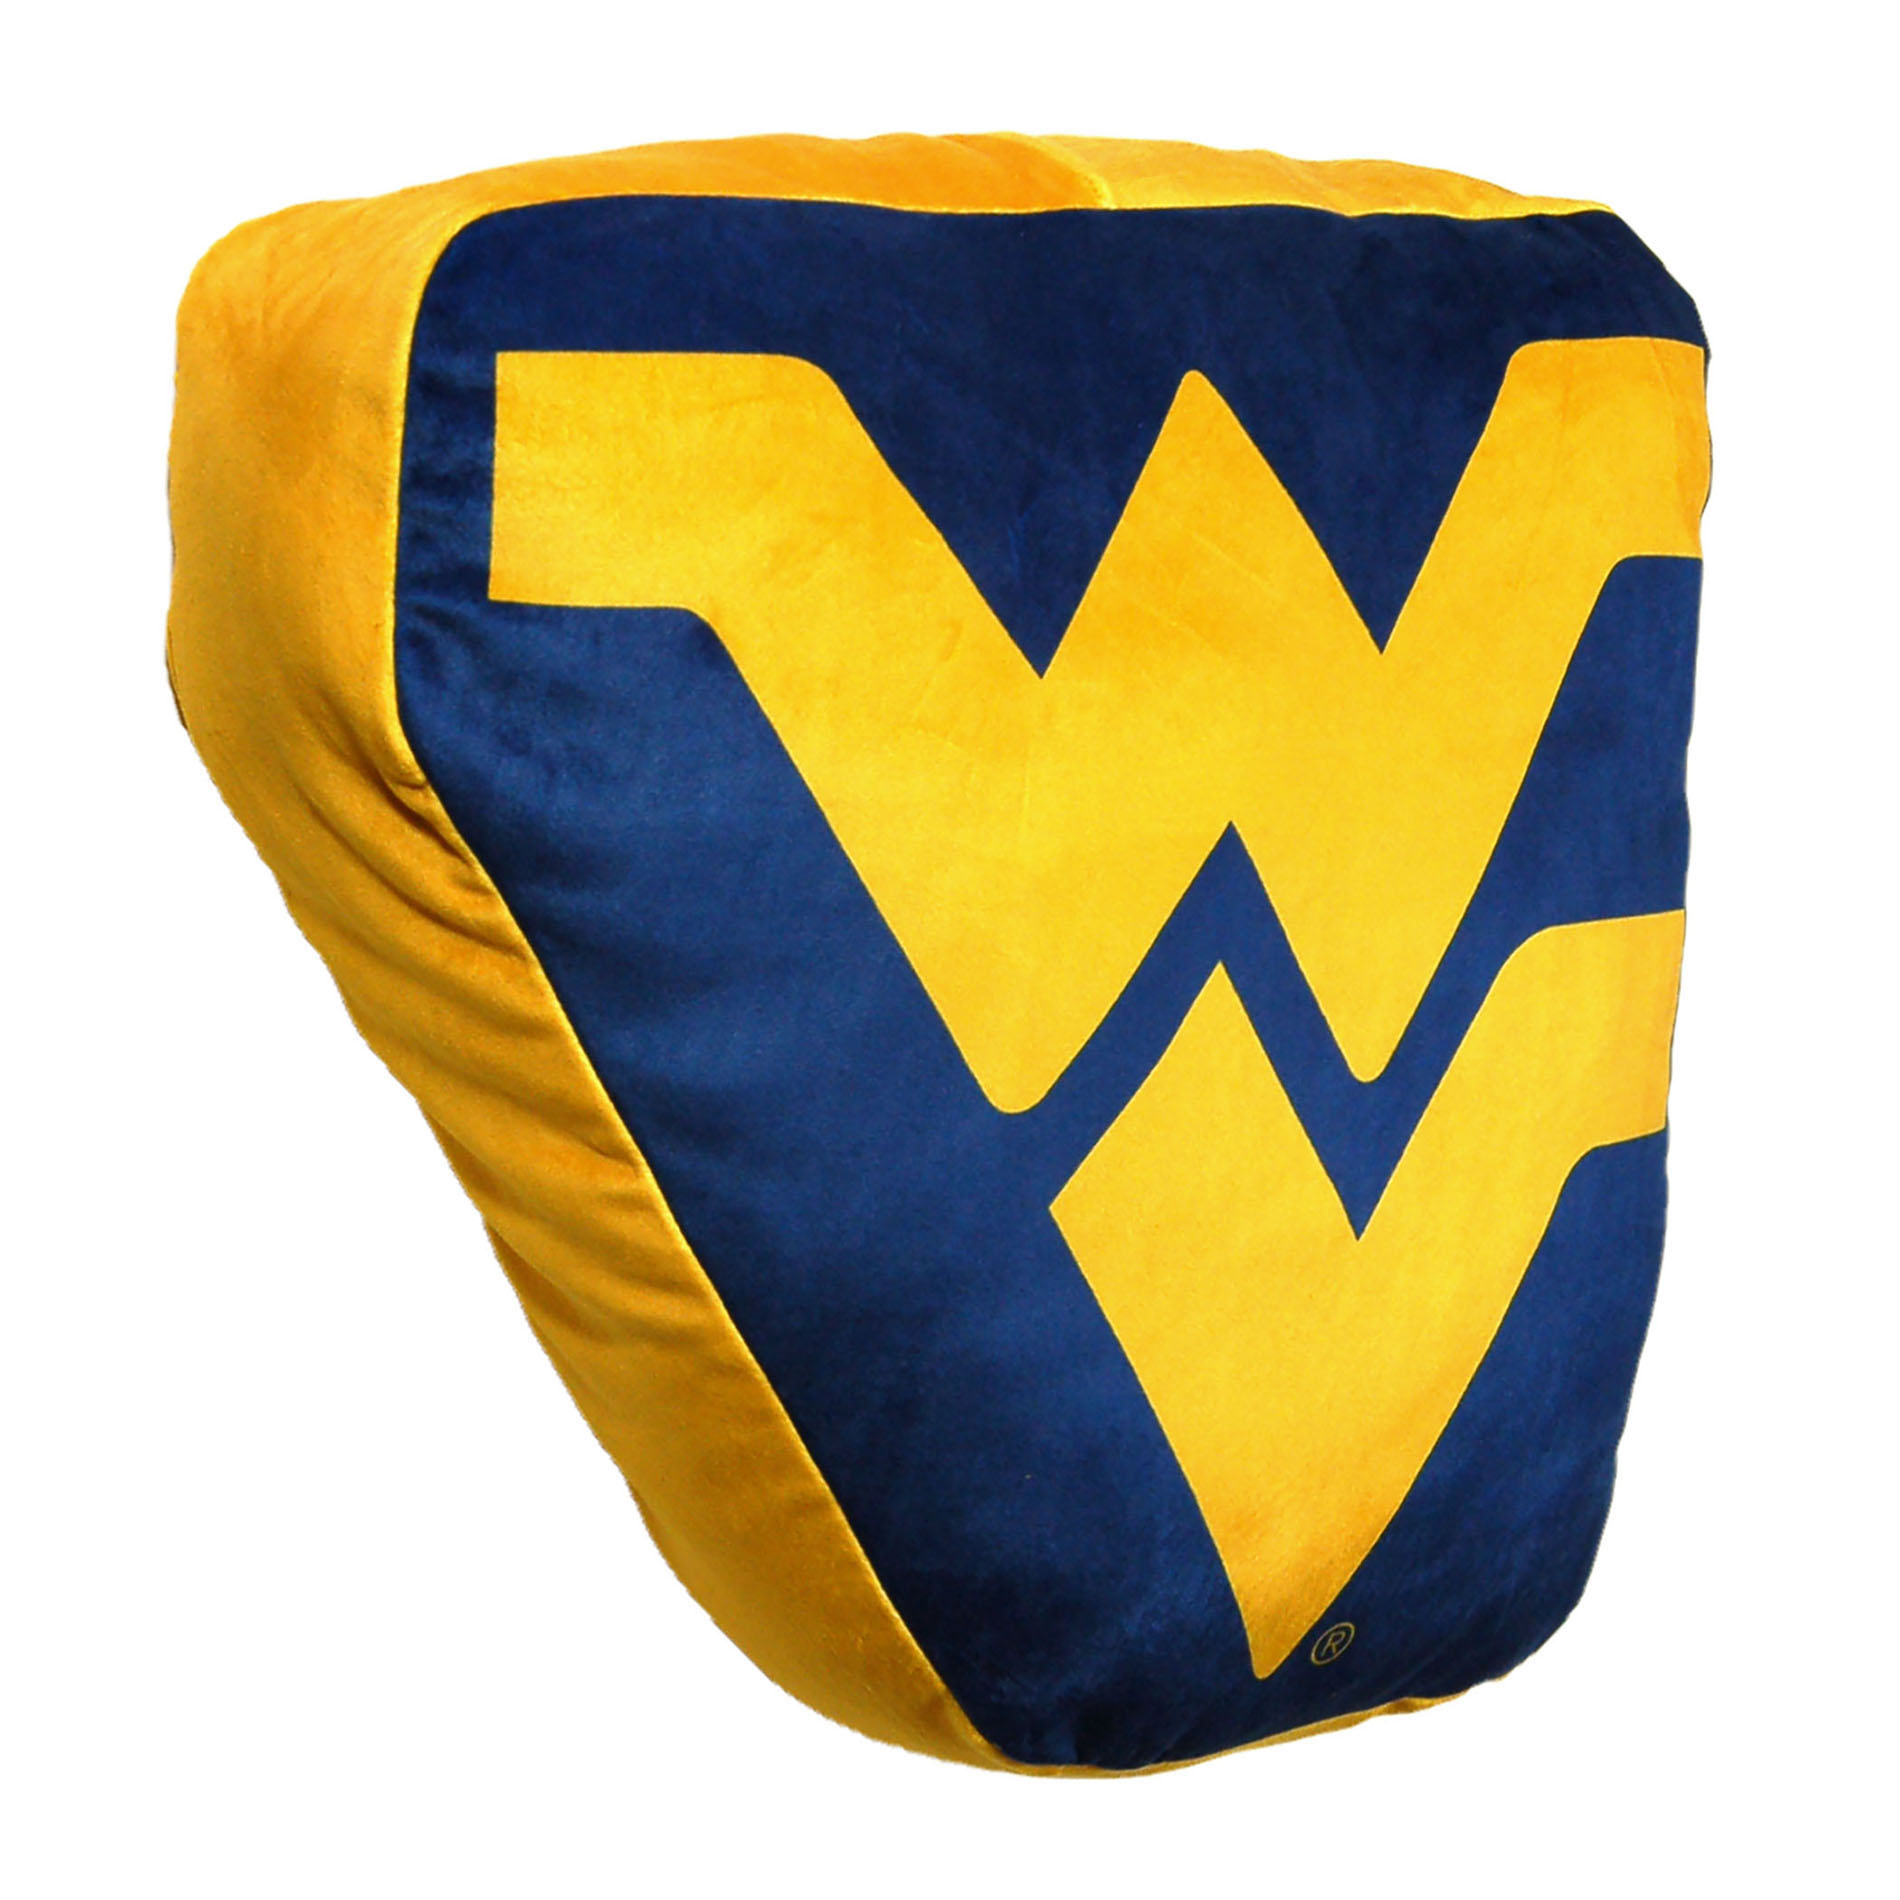 NCAA Logo Cloud Pillow - West Virginia Mountaineers